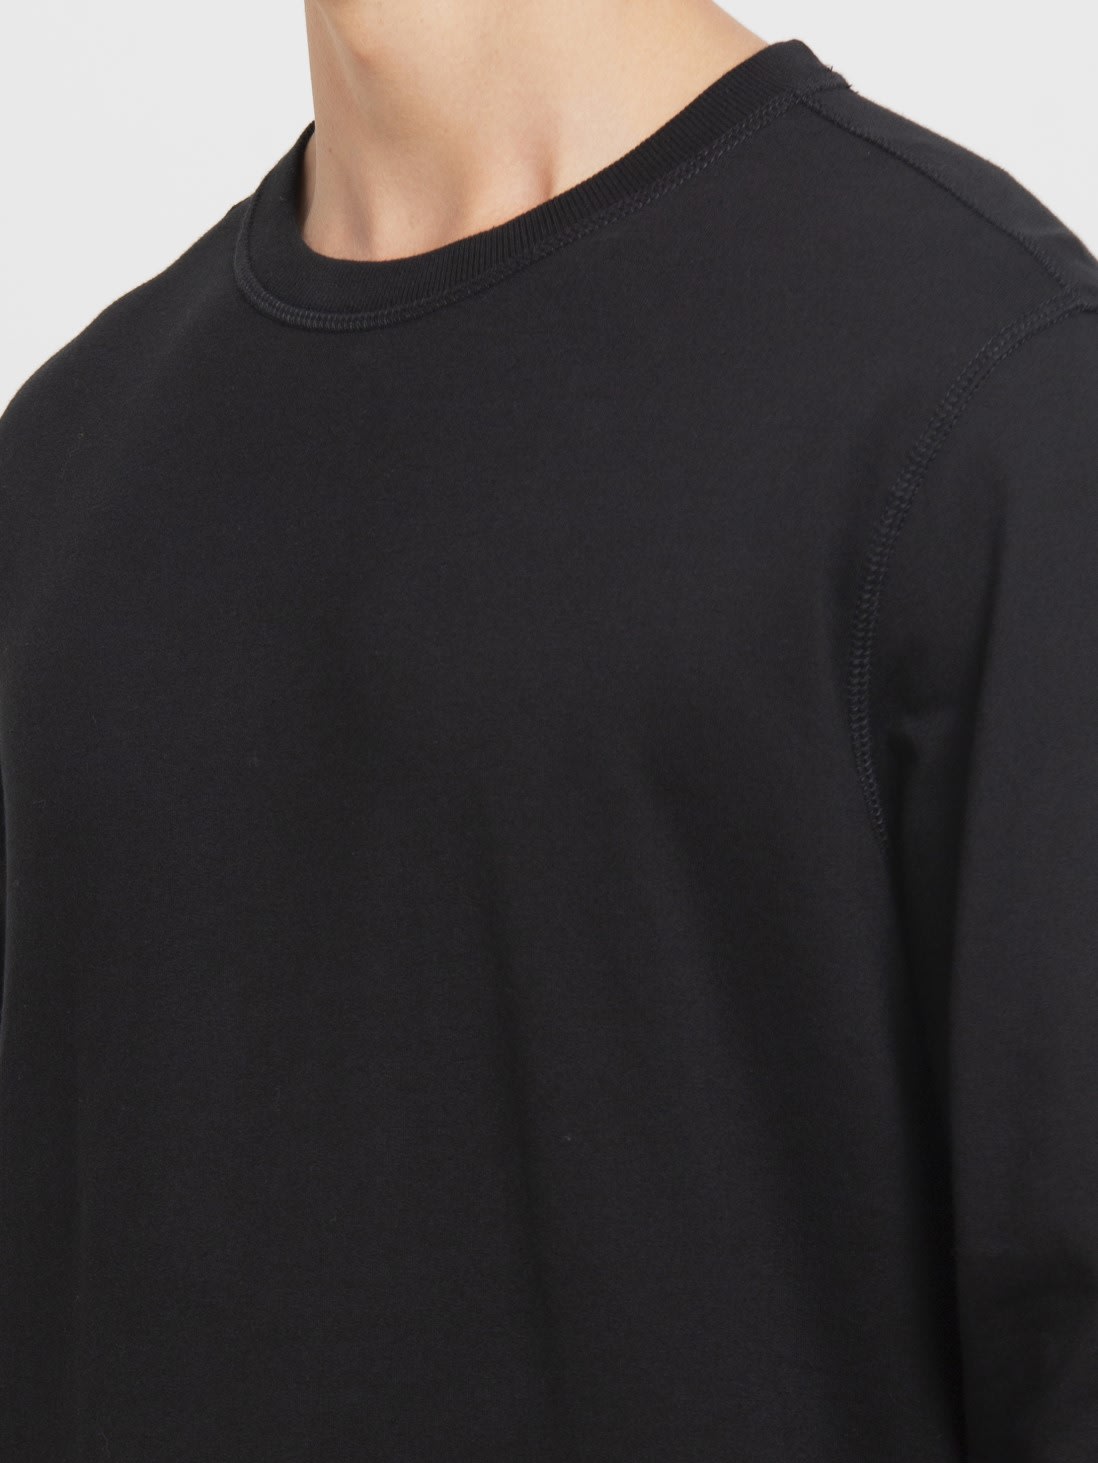 Buy Black Round Neck Full Sleeve Sweatshirt for Men 2716 | Jockey India